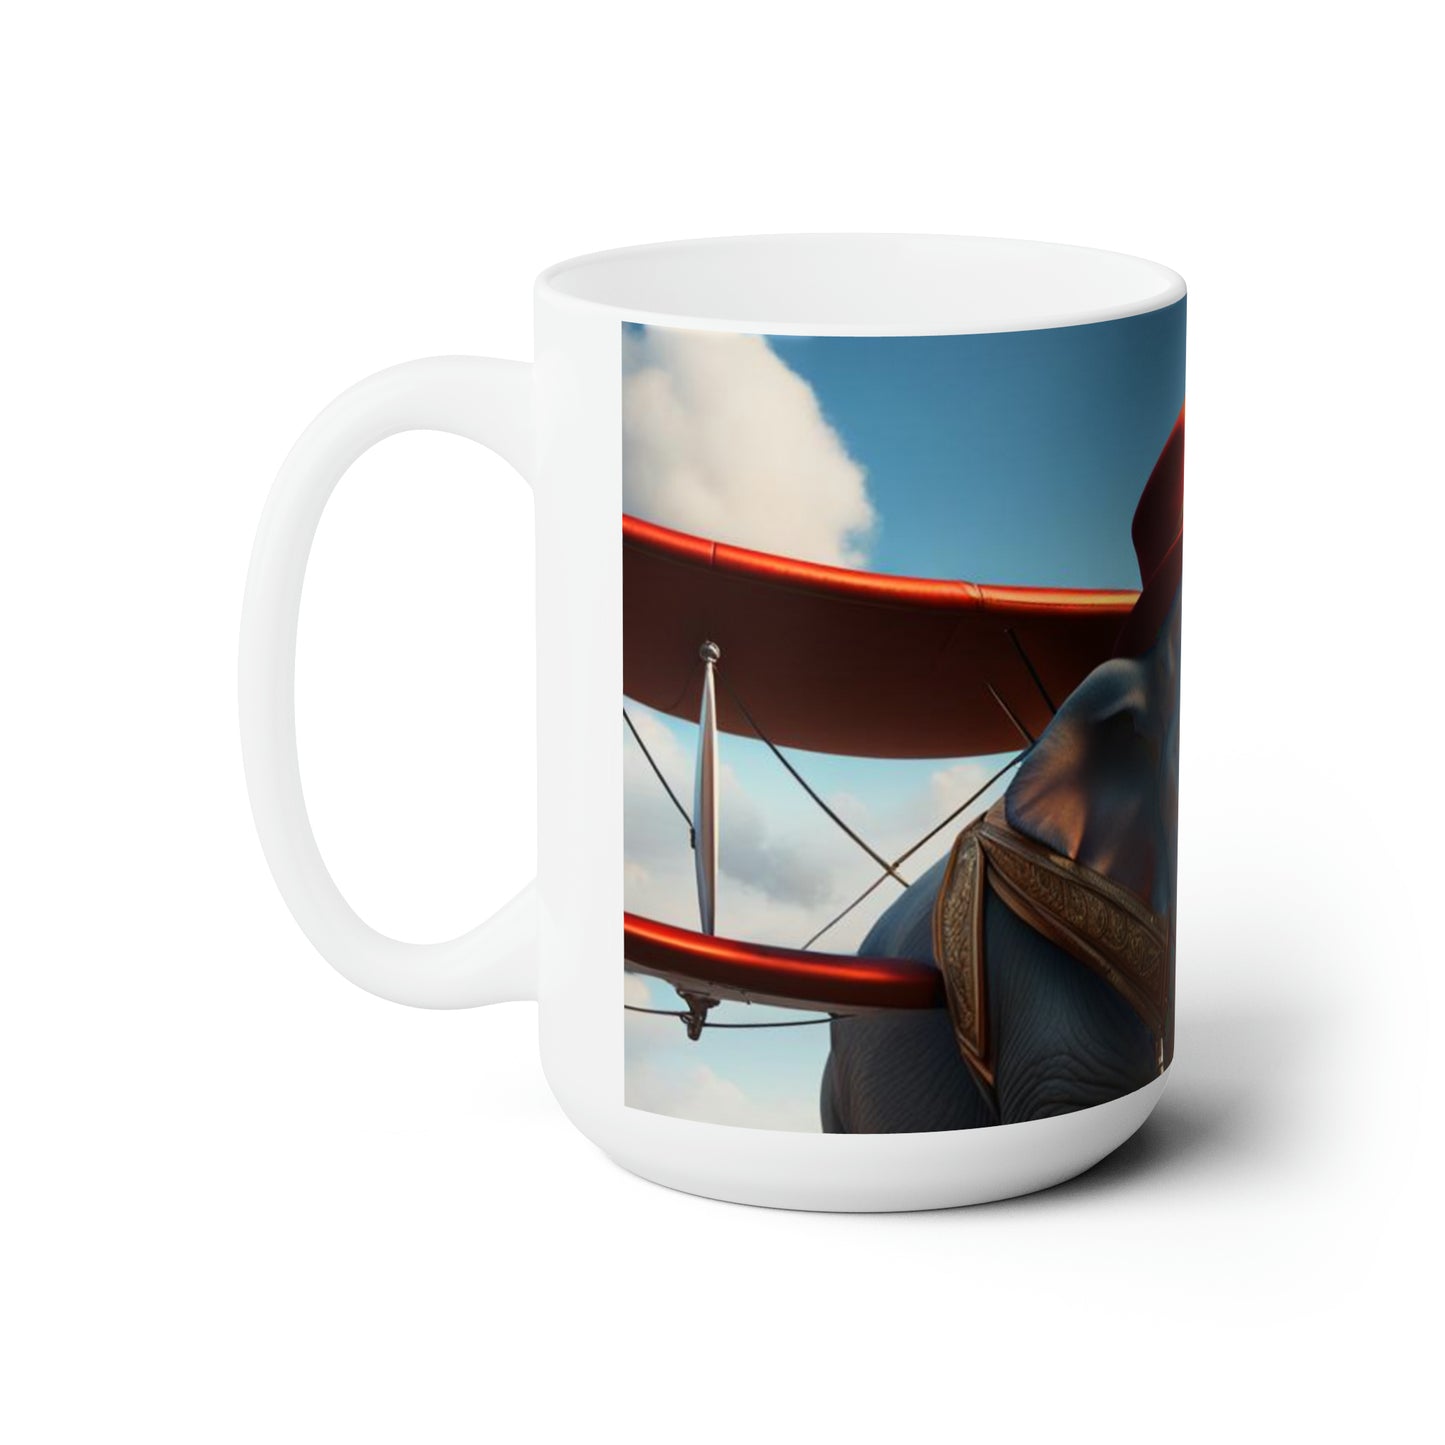 Flying Havana Elephant themed Ceramic Mug 15oz